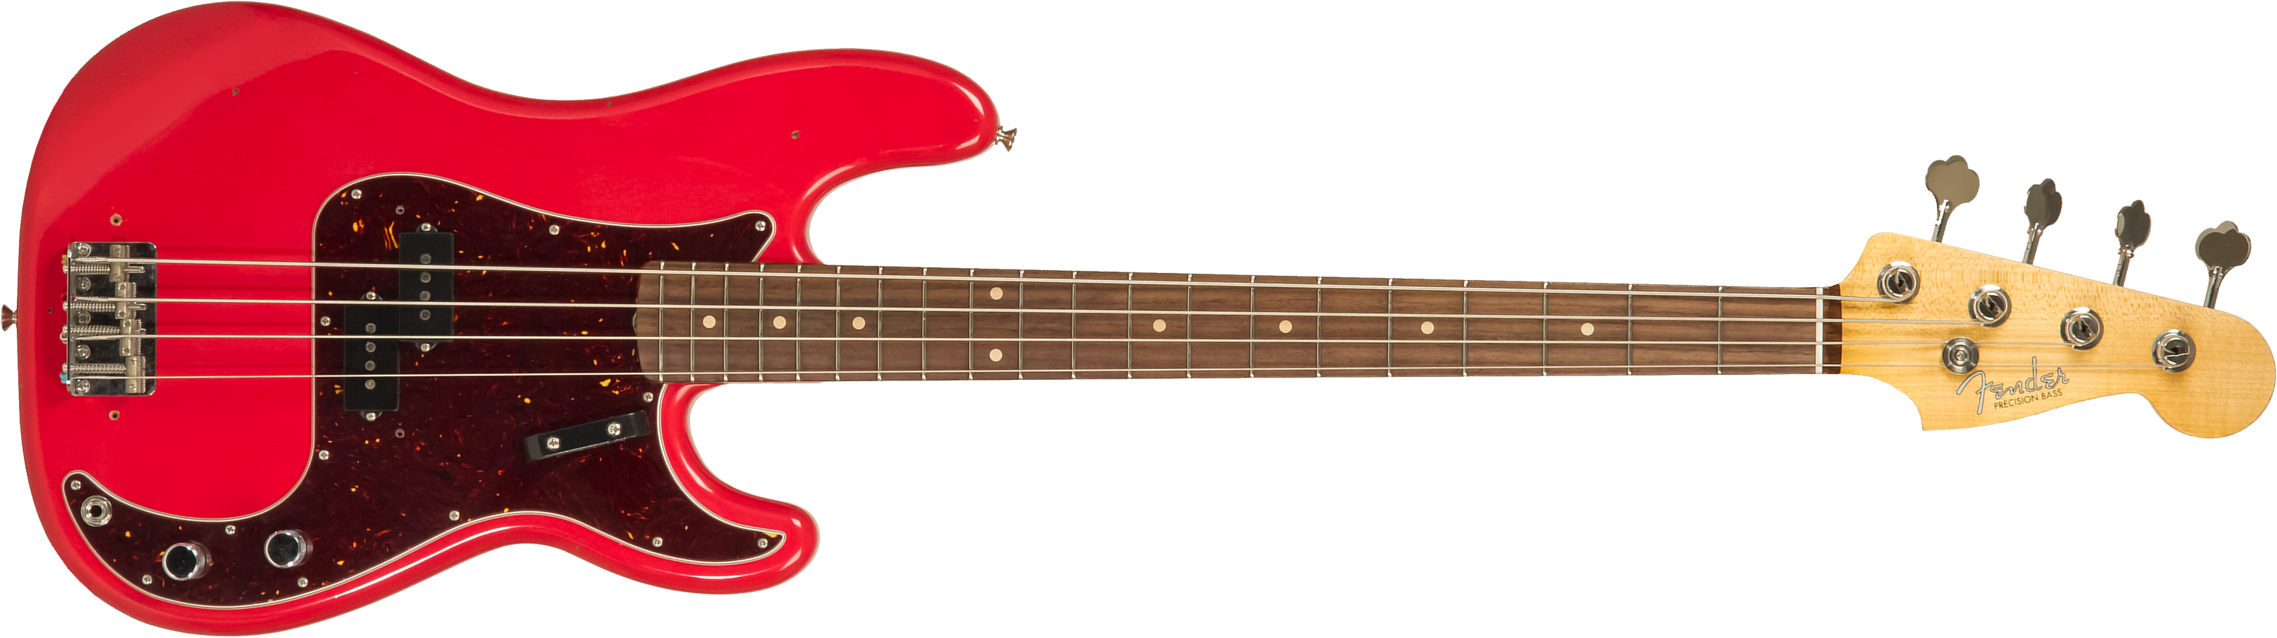 Fender Custom Shop Precision Bass 1962 Rw #r126357 - Journeyman Relic Fiesta Red - Solidbody E-bass - Main picture